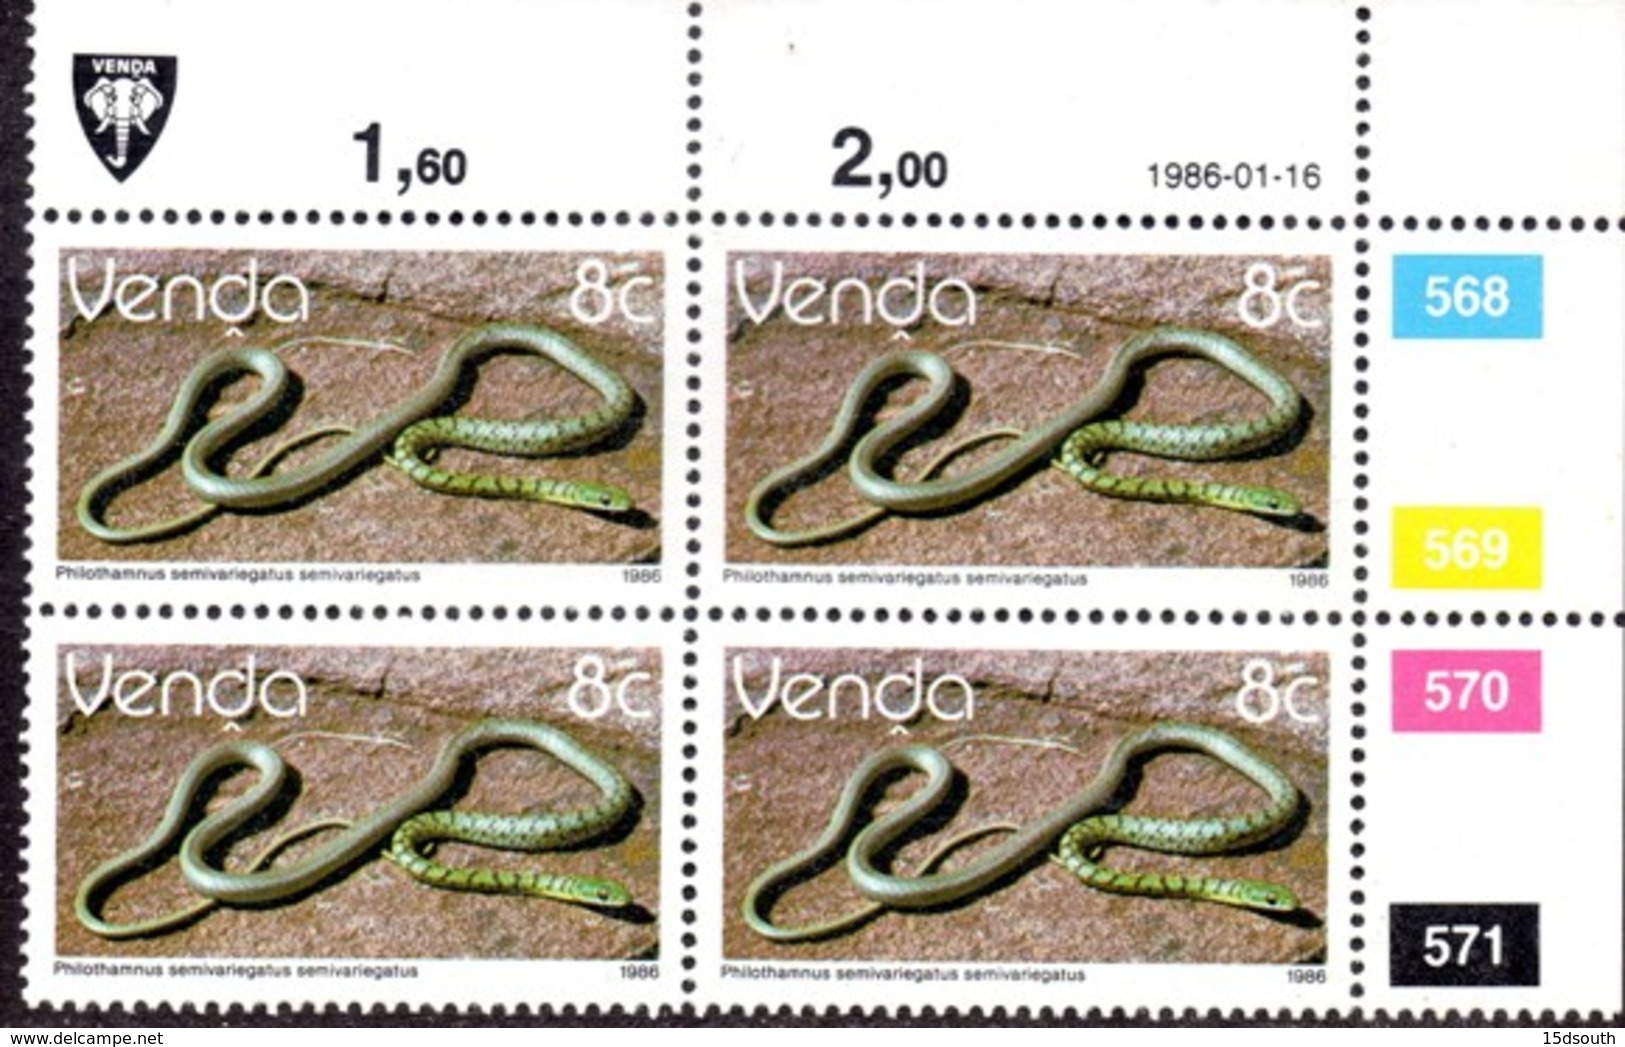 Venda - 1986 Reptiles 8c Control Block (1986.01.16) (**) - Venda